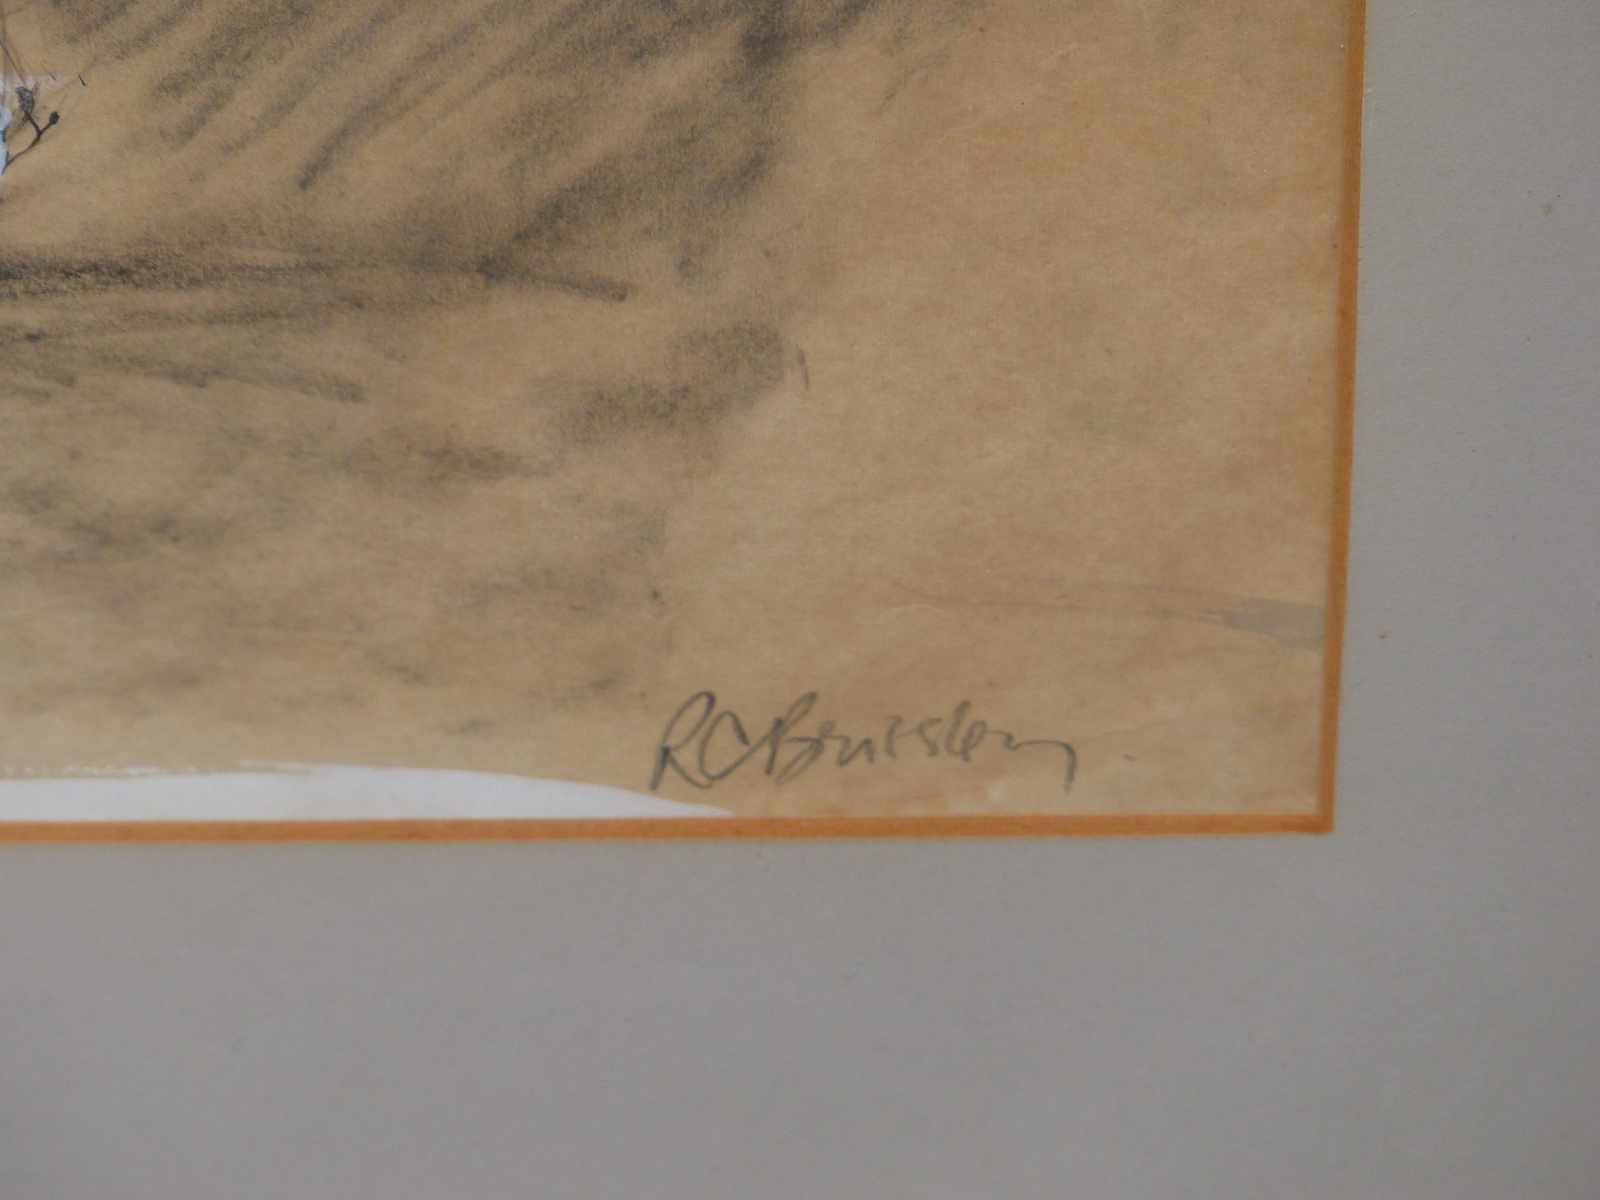 R.C. BRUESLEY(?) (20TH CENTURY), CLOWN FIGURE, CHALKS, 39.5 x 45.5cms. - Image 4 of 4